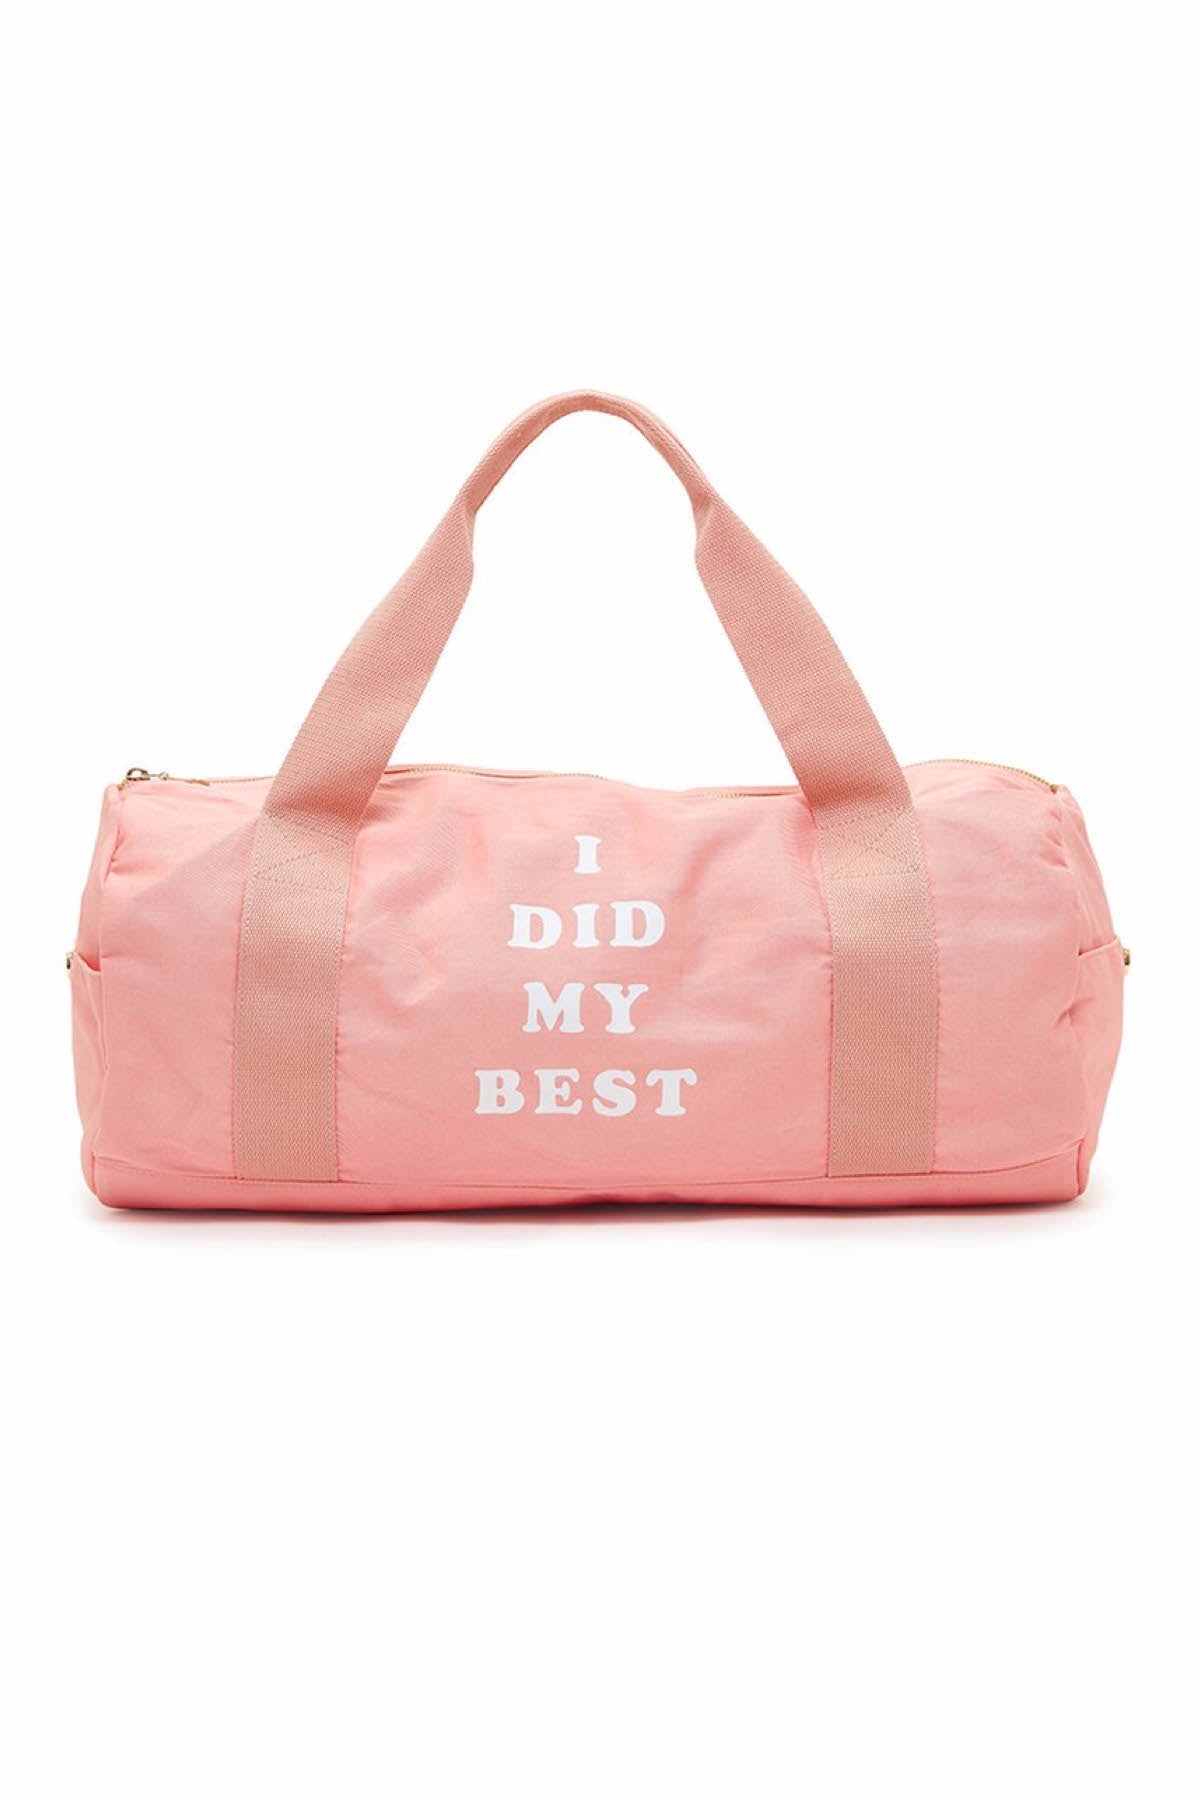 Ban.do Pink My Best Gym Bag